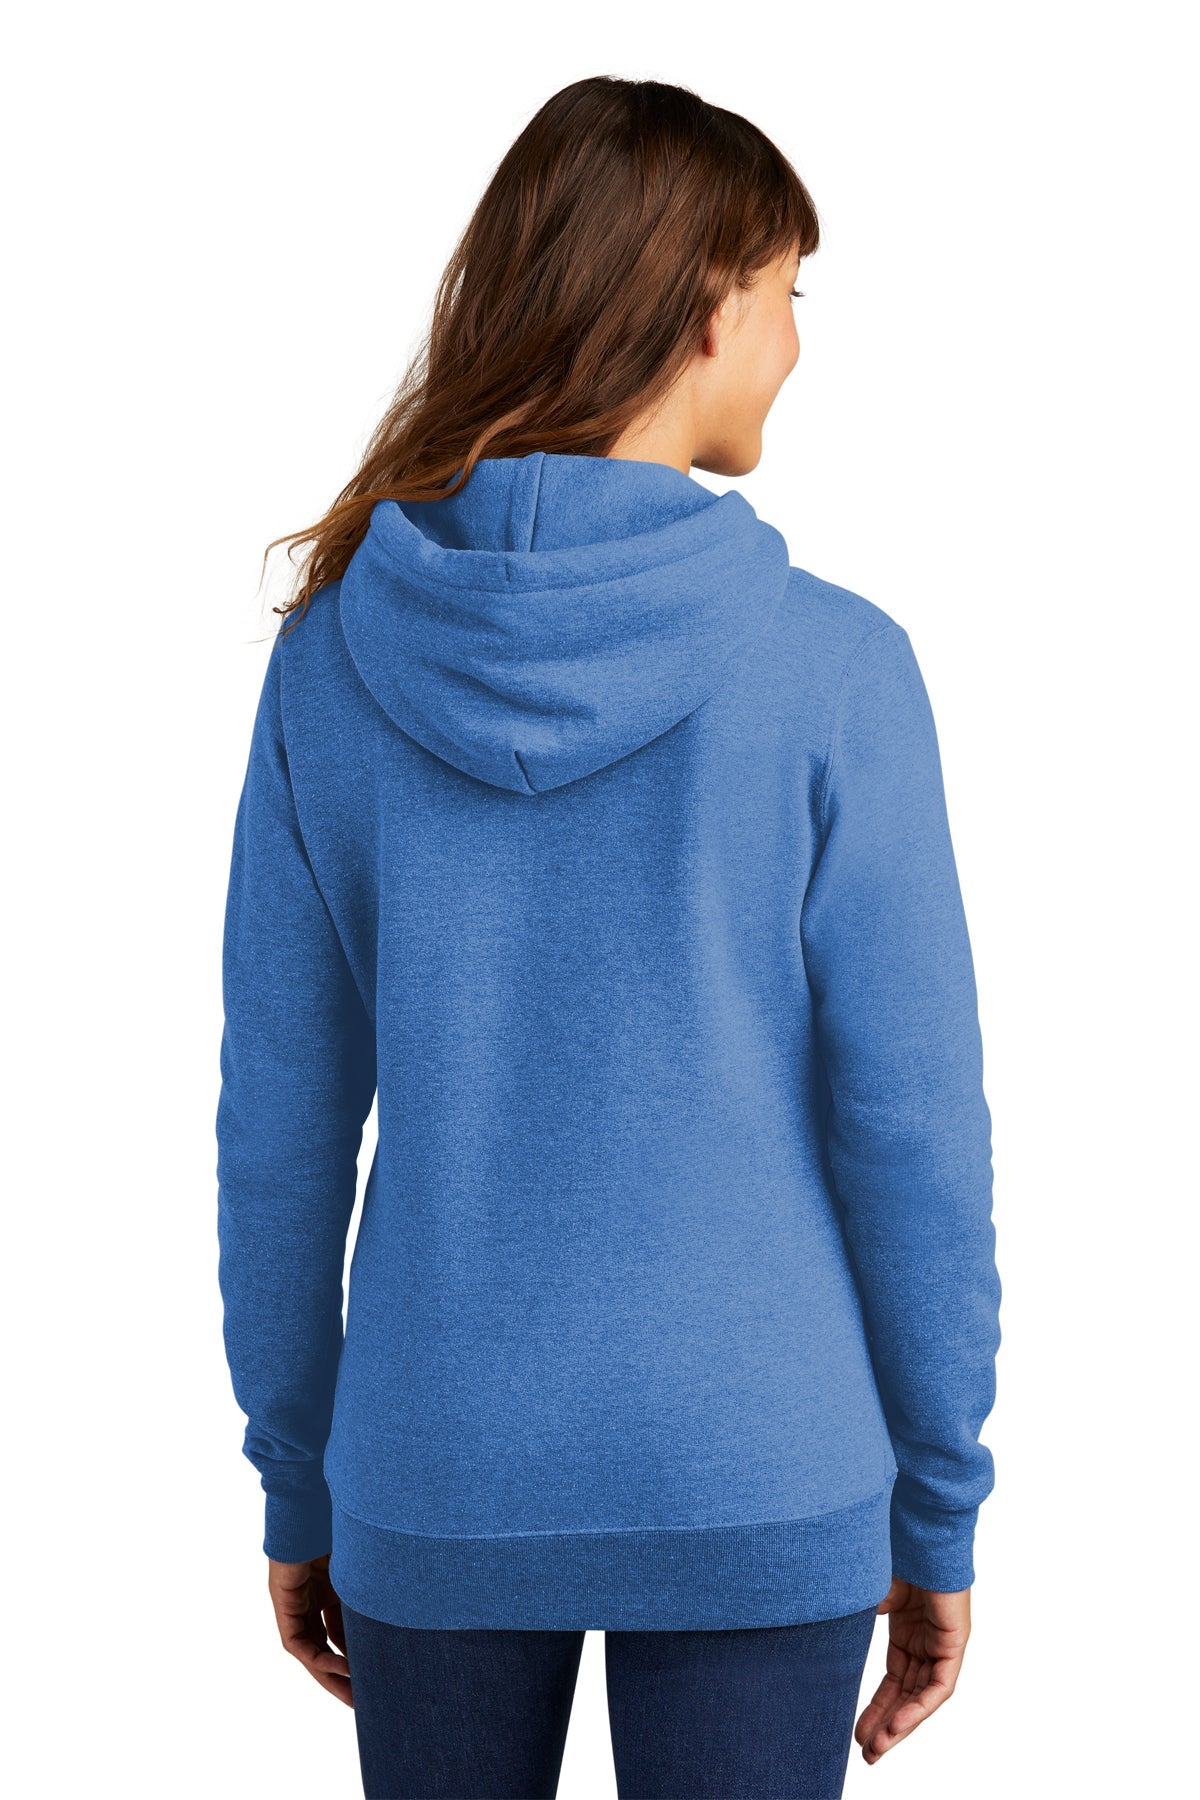 Port & Company Ladies Core Fleece Pullover Hooded Sweatshirt LPC78H Heather Royal